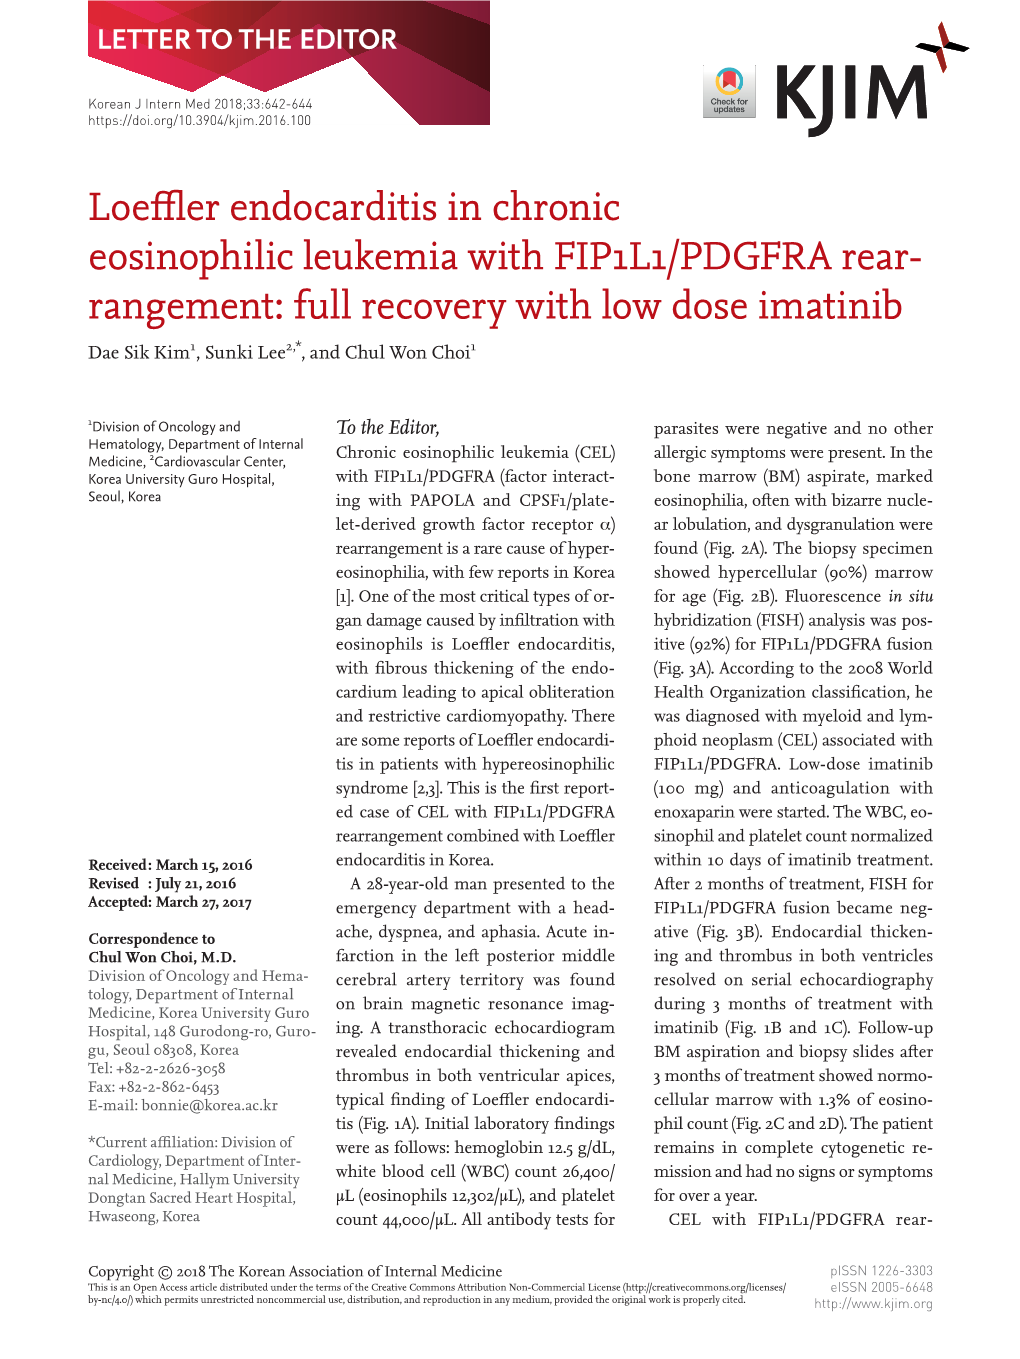 Loeffler Endocarditis in Chronic Eosinophilic Leukemia with FIP1L1